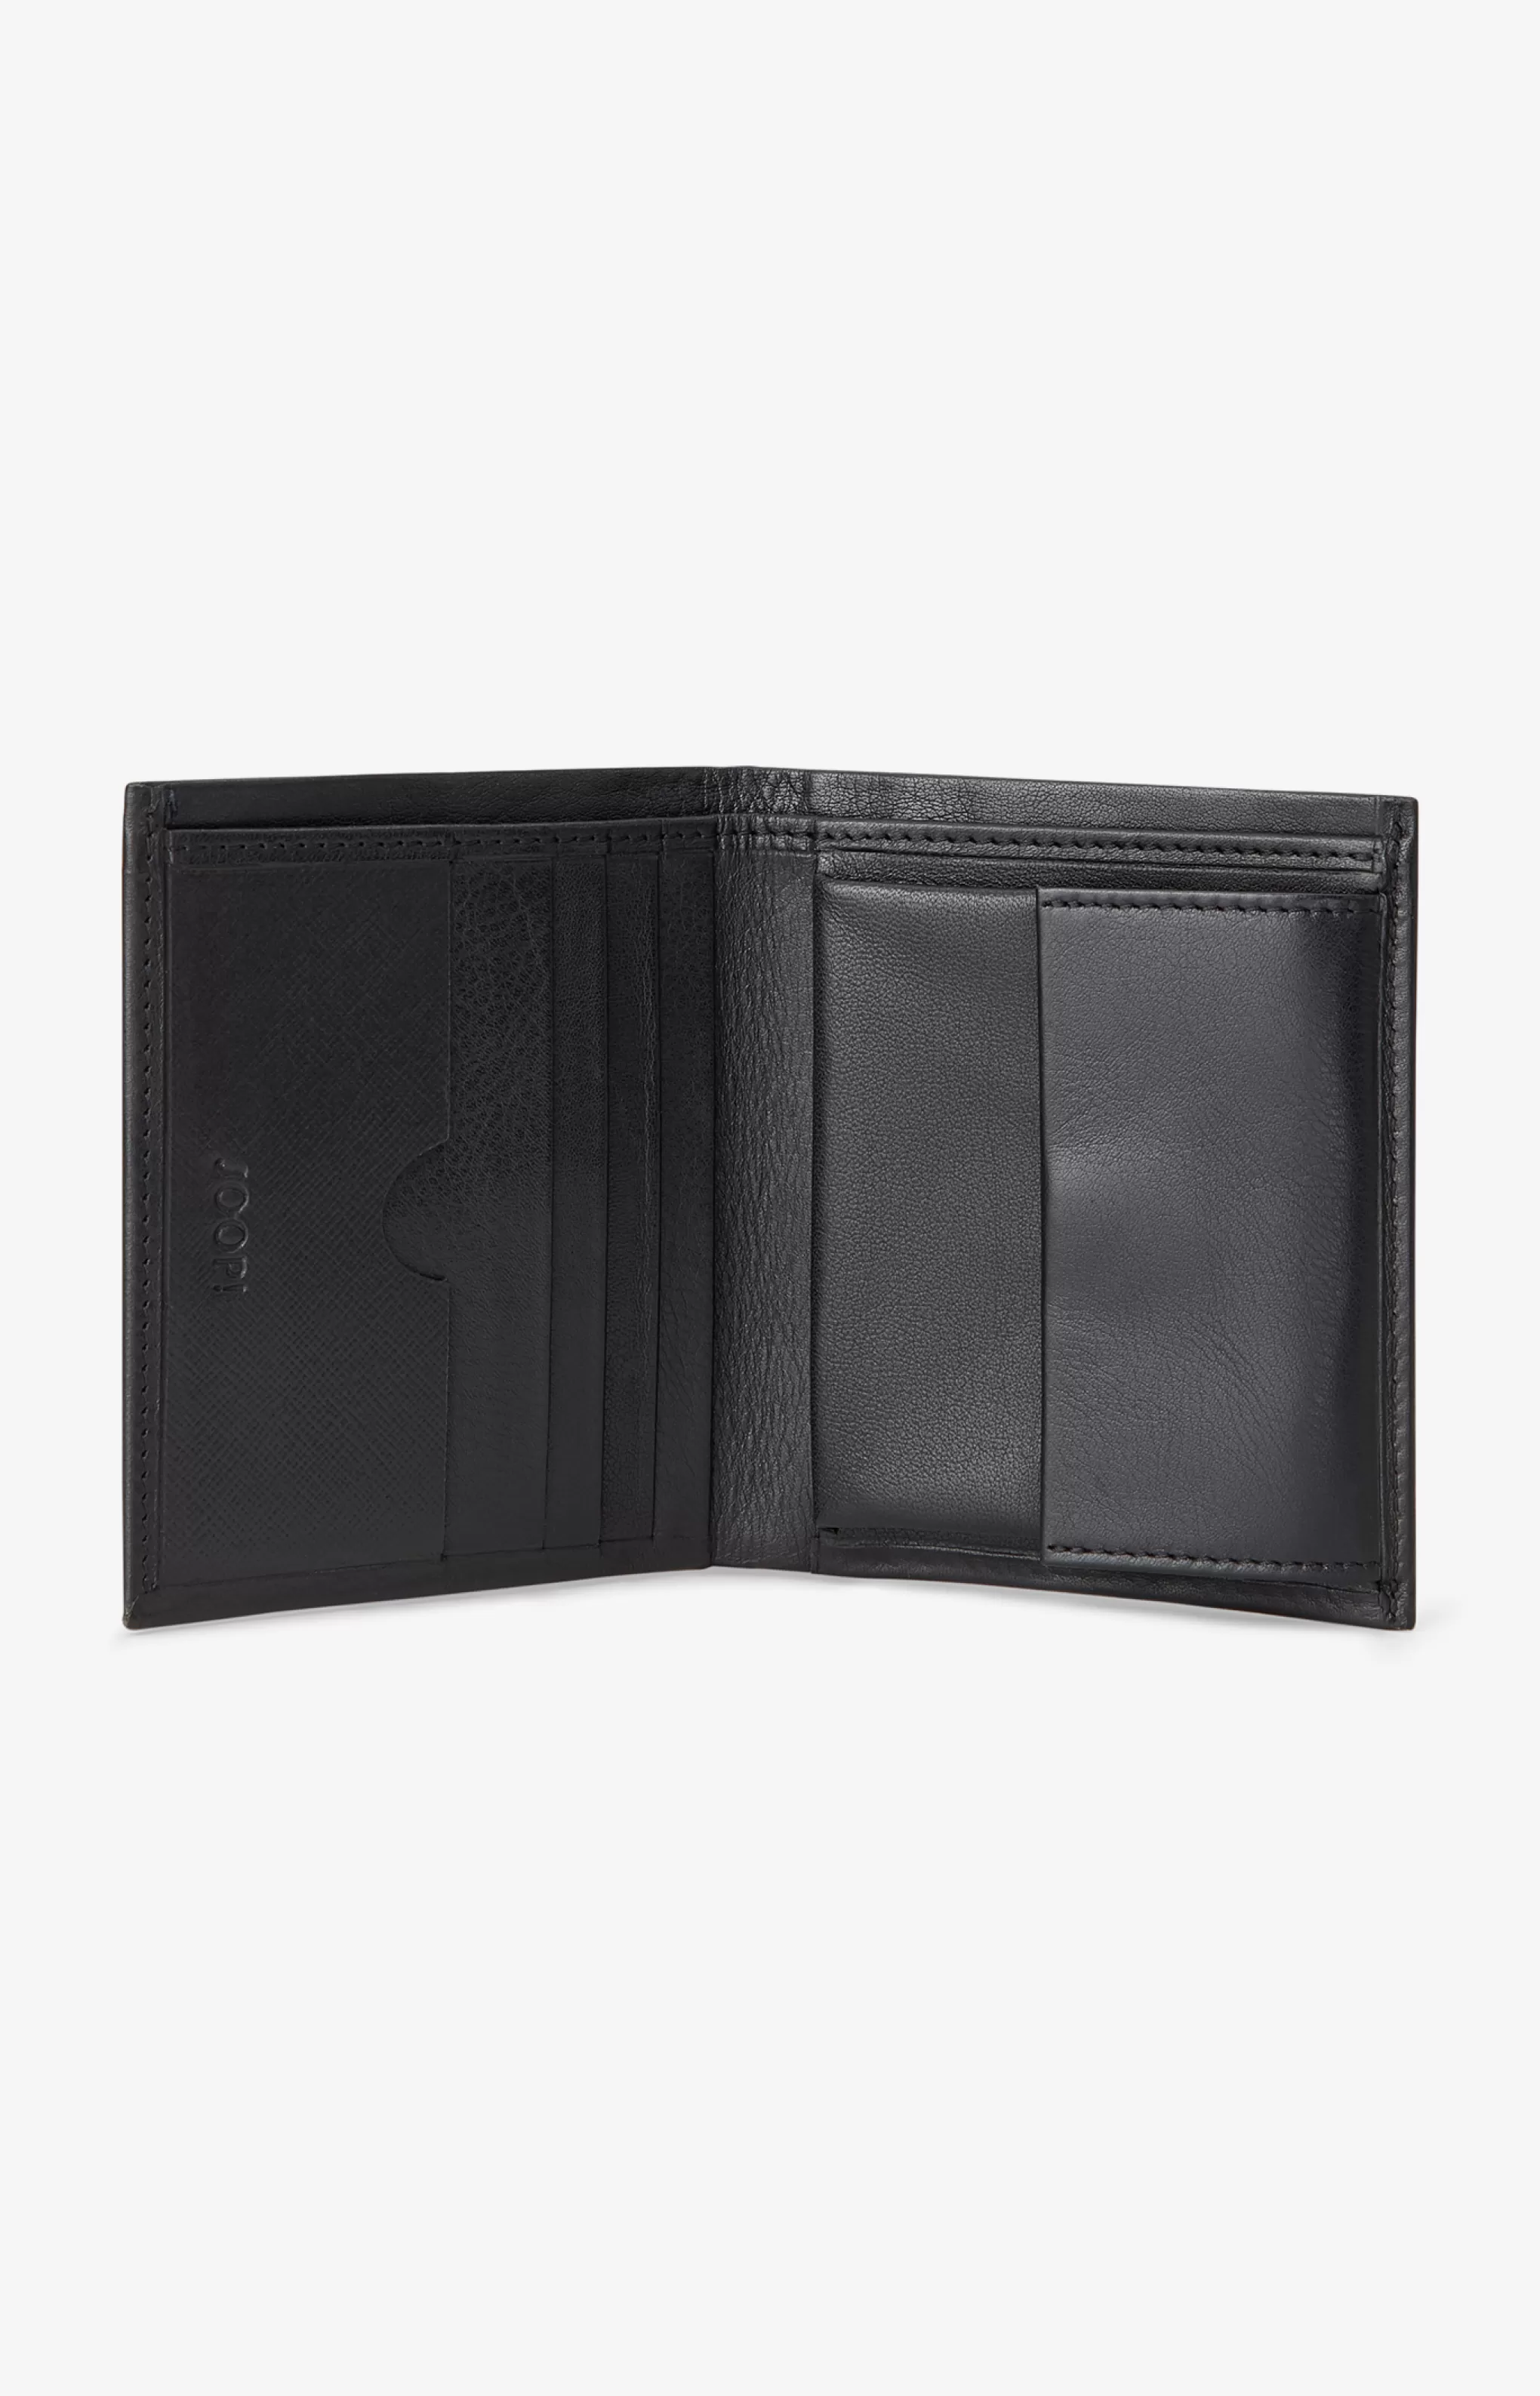 Small Leather Goods*JOOP Small Leather Goods Daphnis Wallet in Black